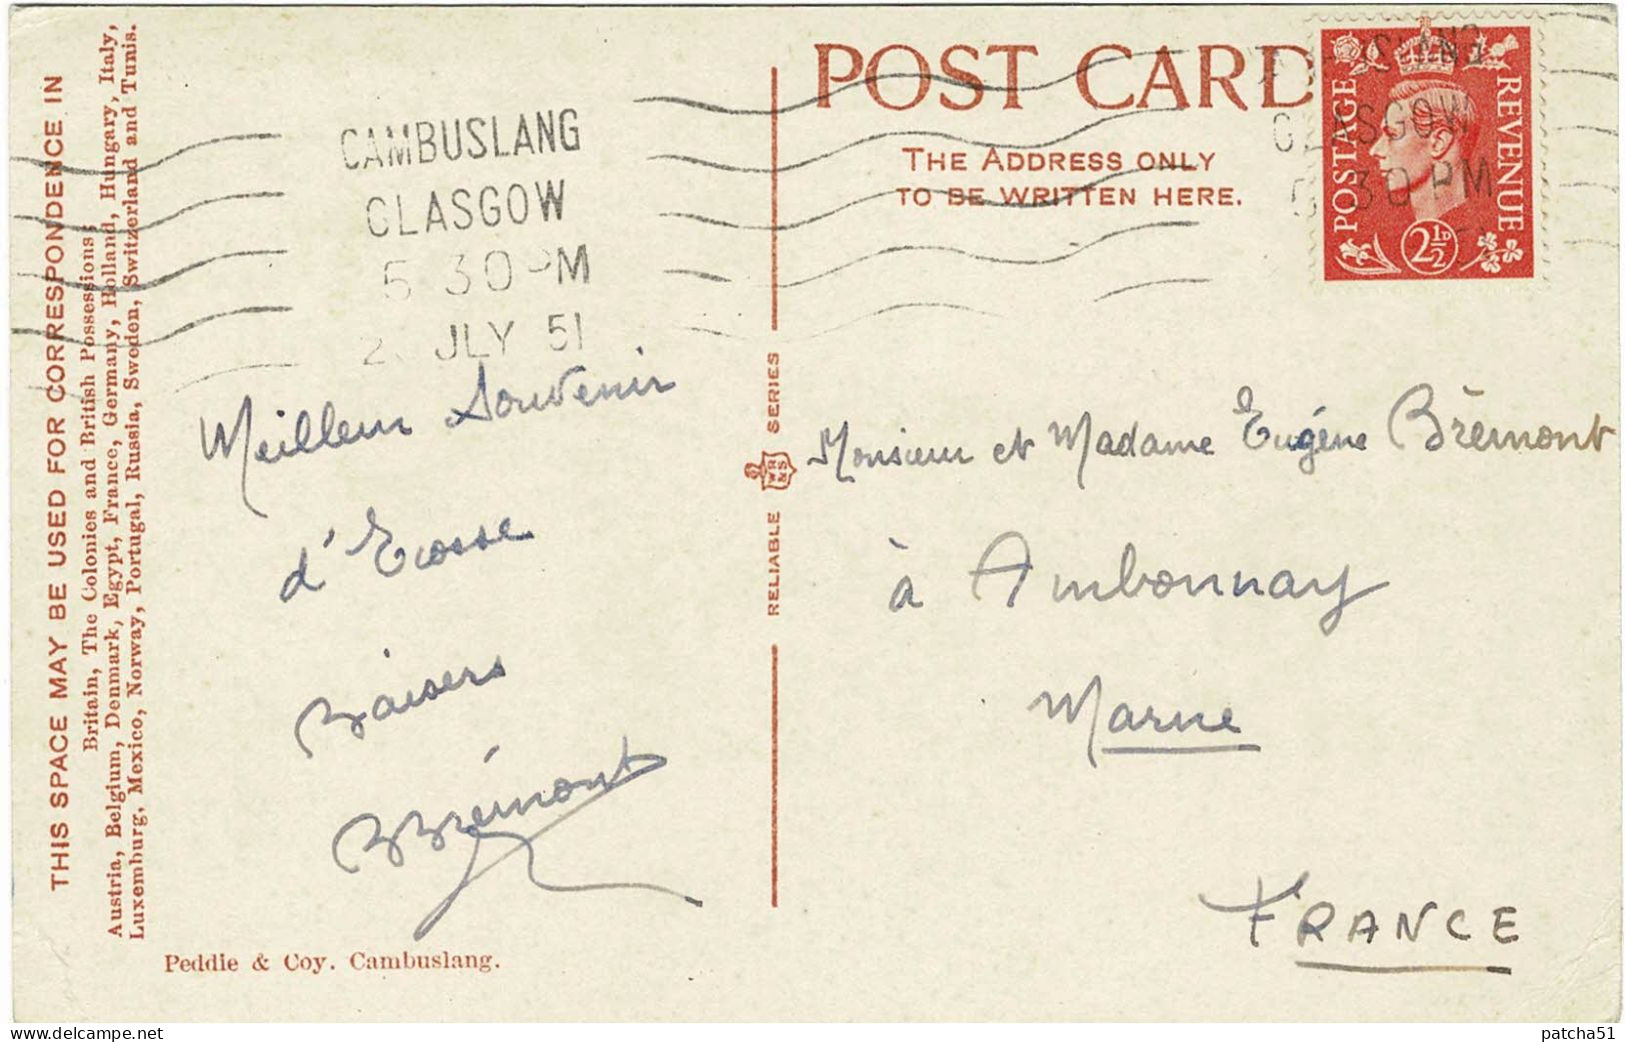 CAMBUSLANG - Public School - Nice Coloring - Traveled In 1951 - Lanarkshire / Glasgow